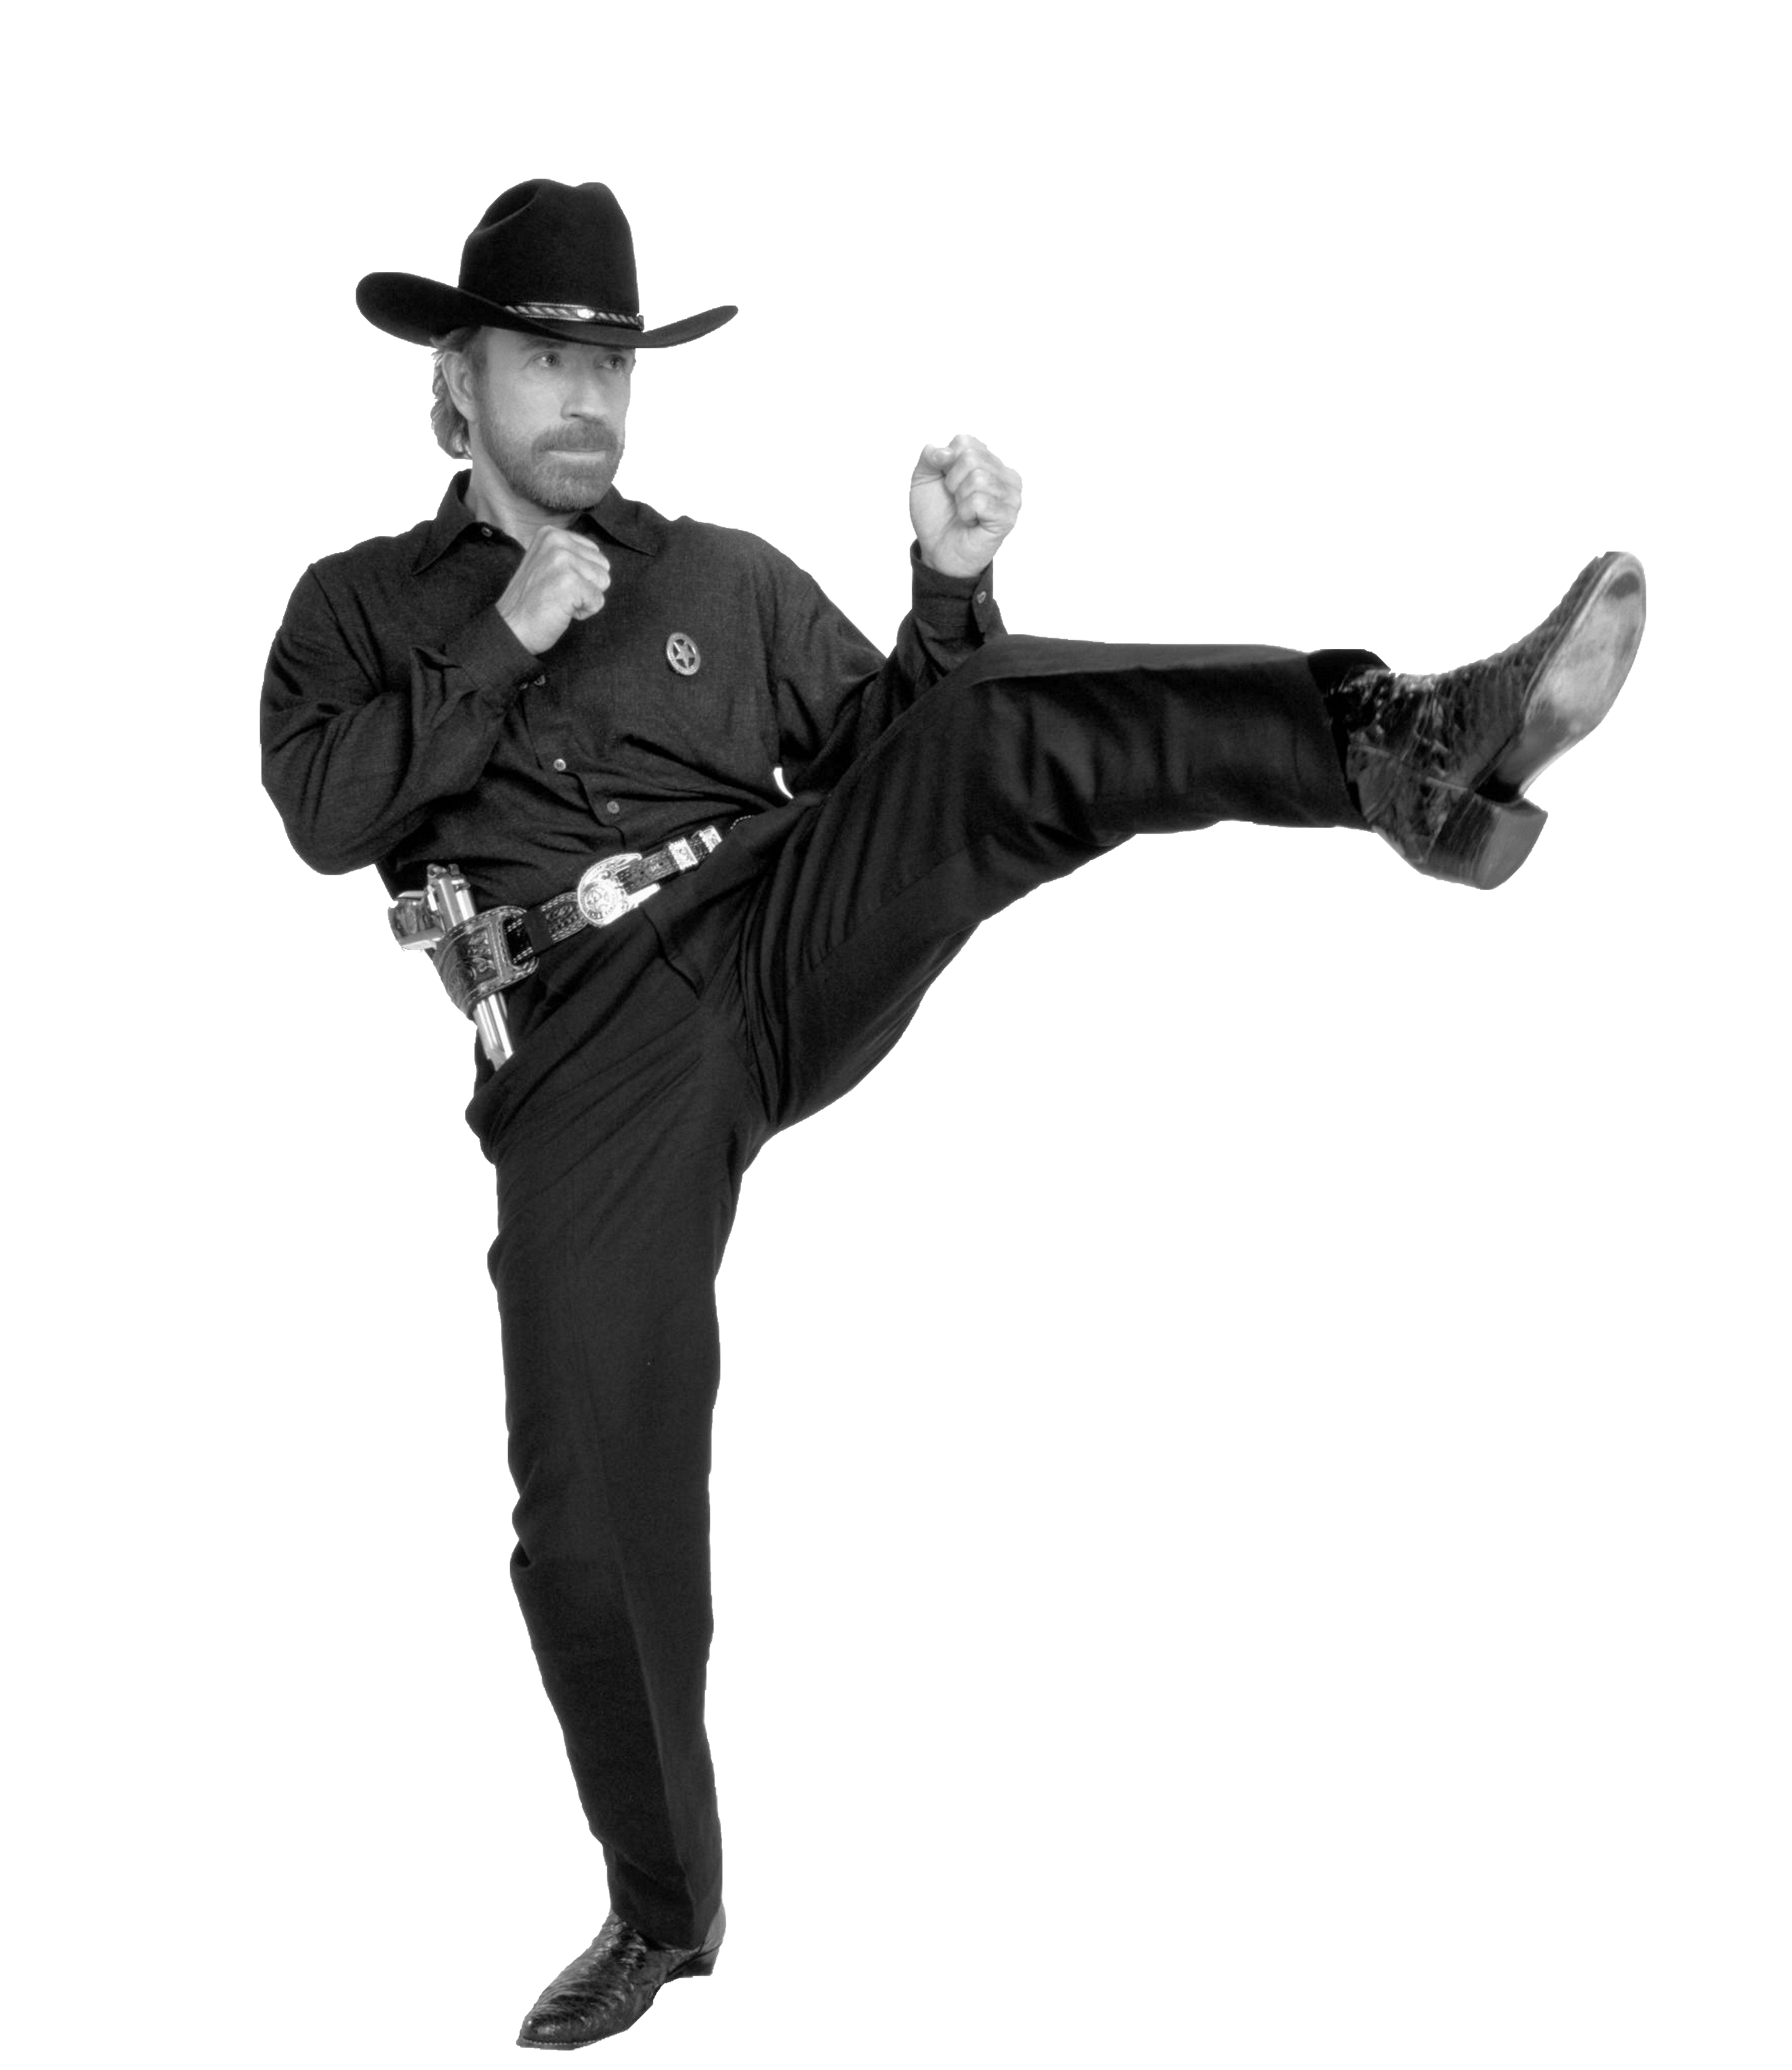 Chuck Norris doing a karate kick